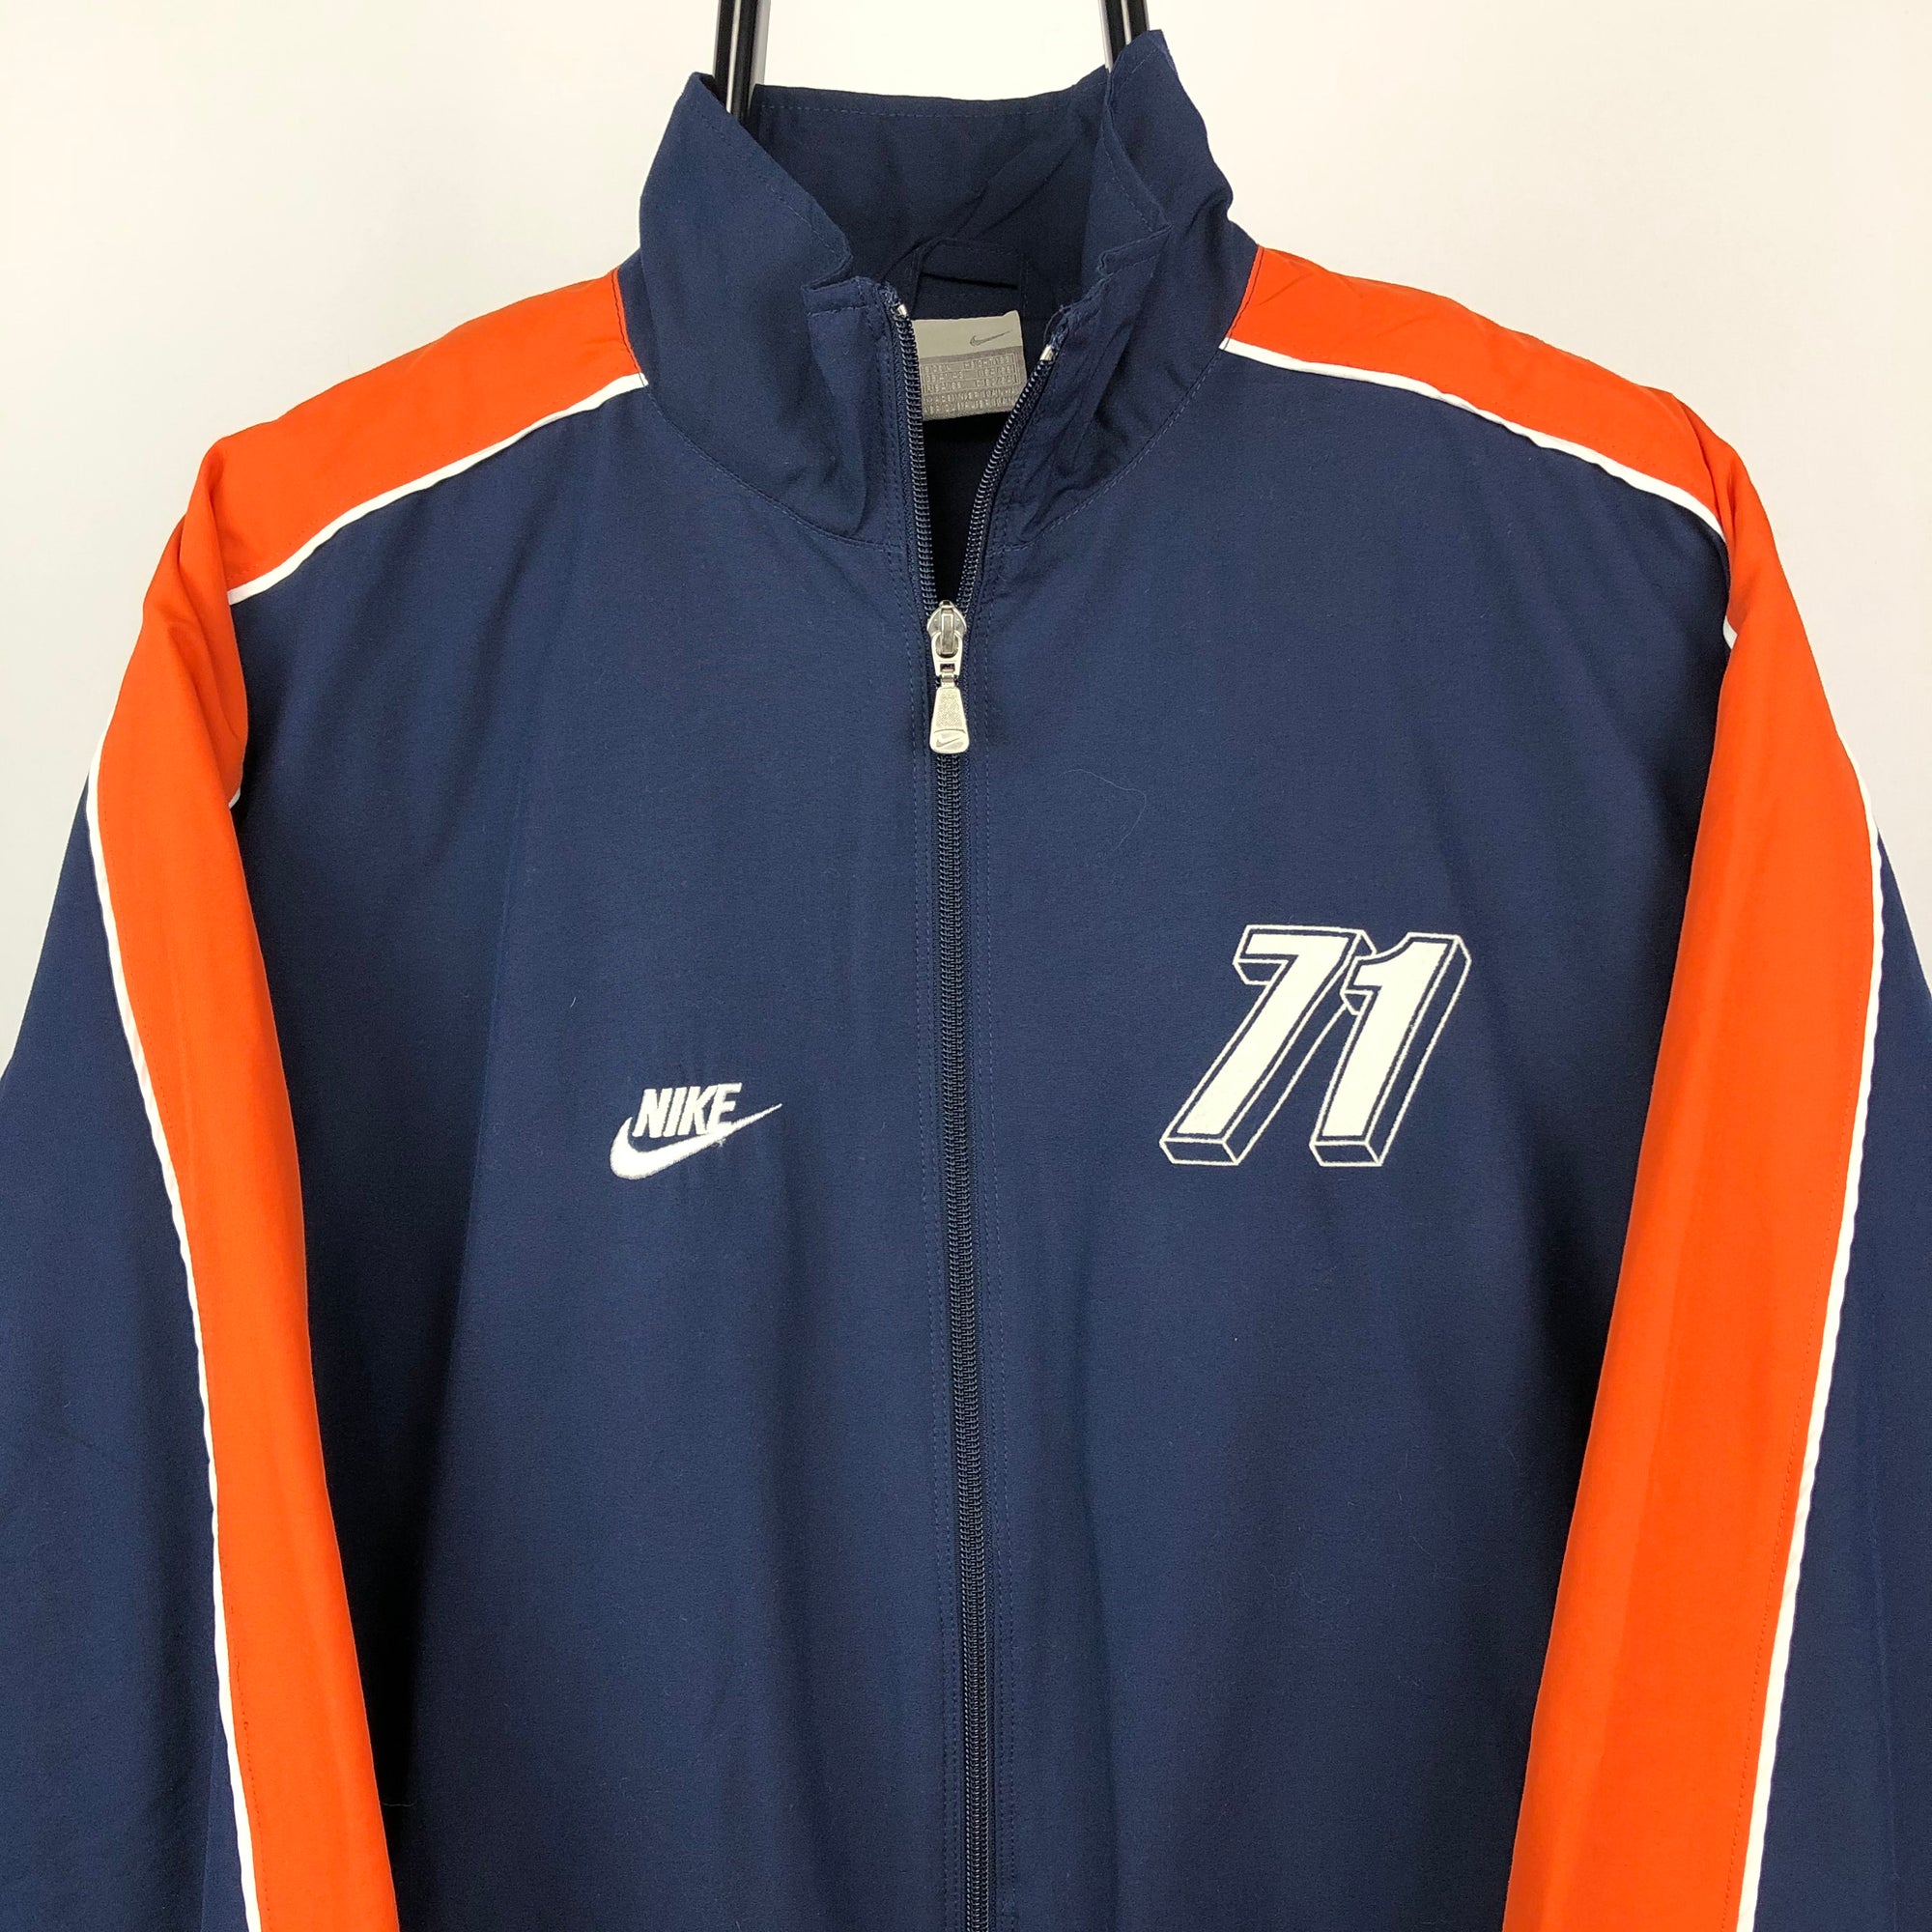 Vintage Nike Track Jacket in Navy/Orange - Men's Large/Women's XL